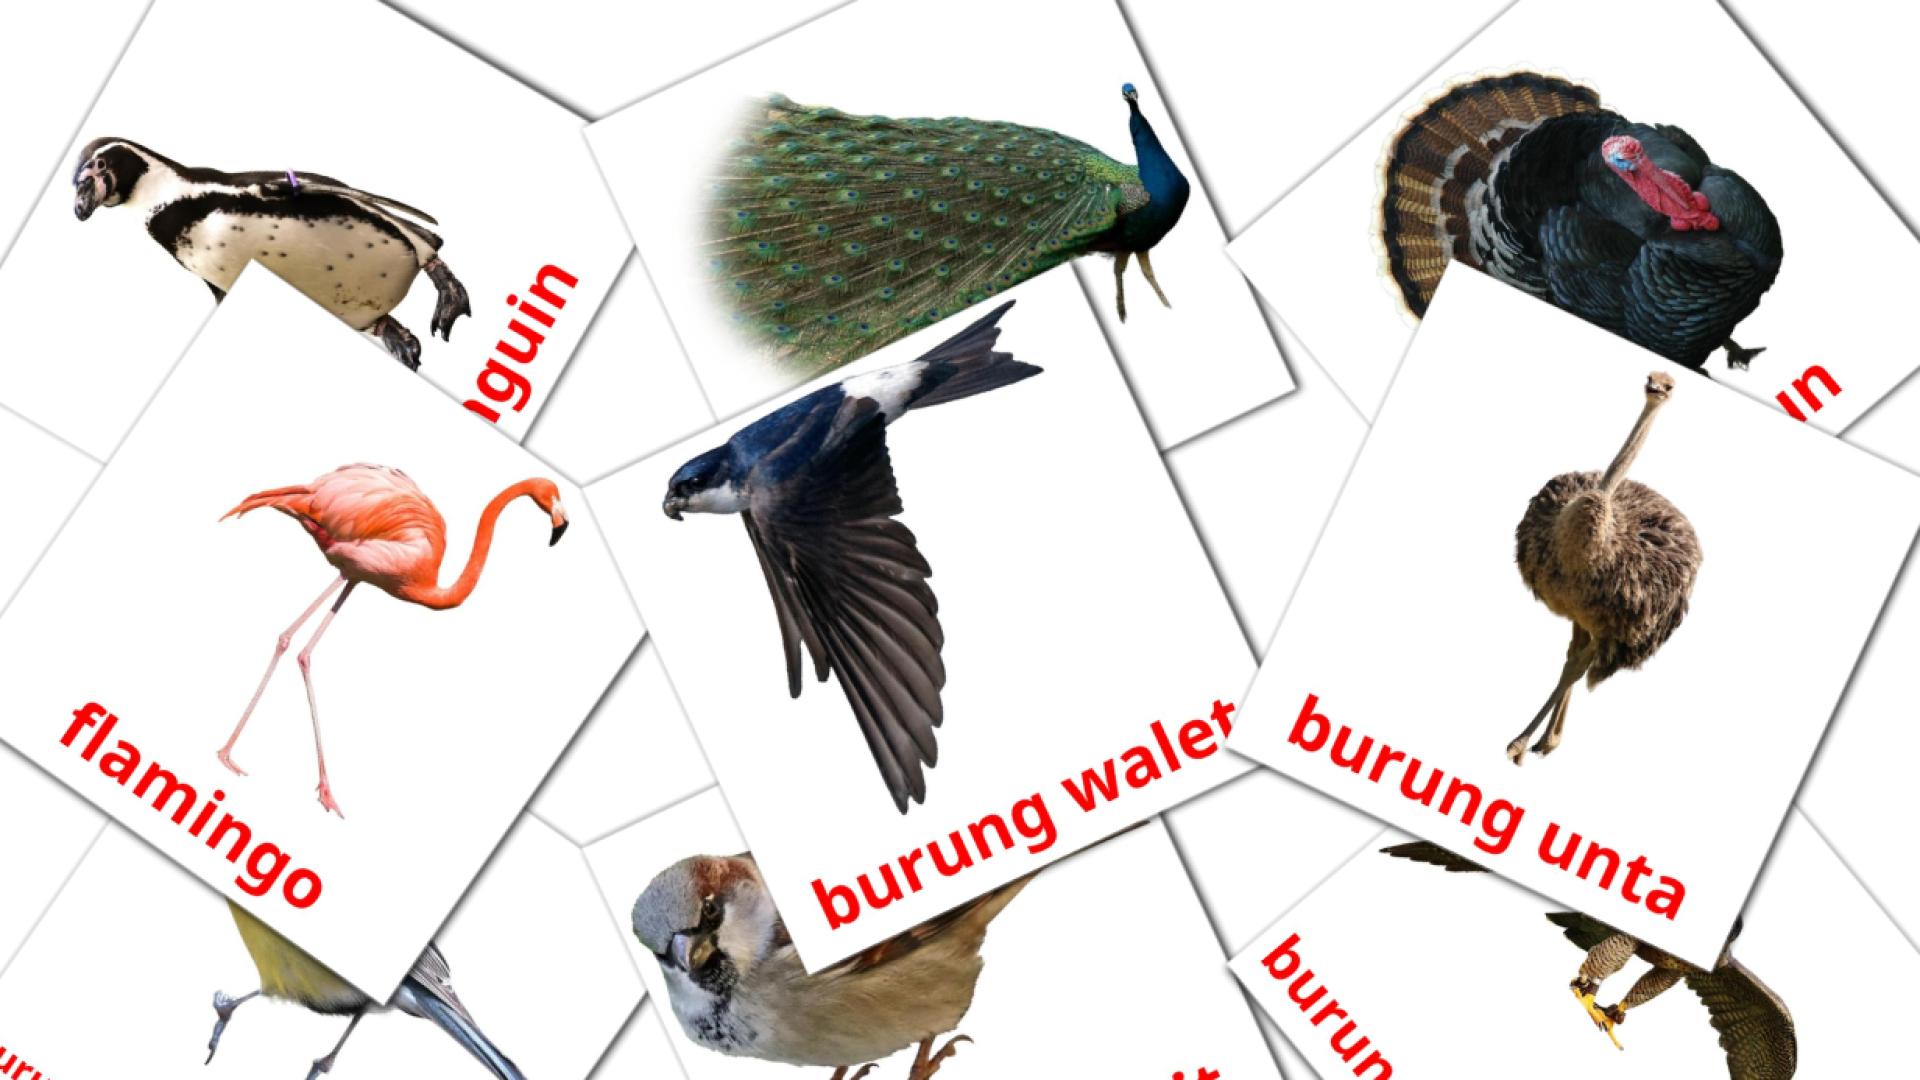 Burung indonesisch woordenschat flashcards